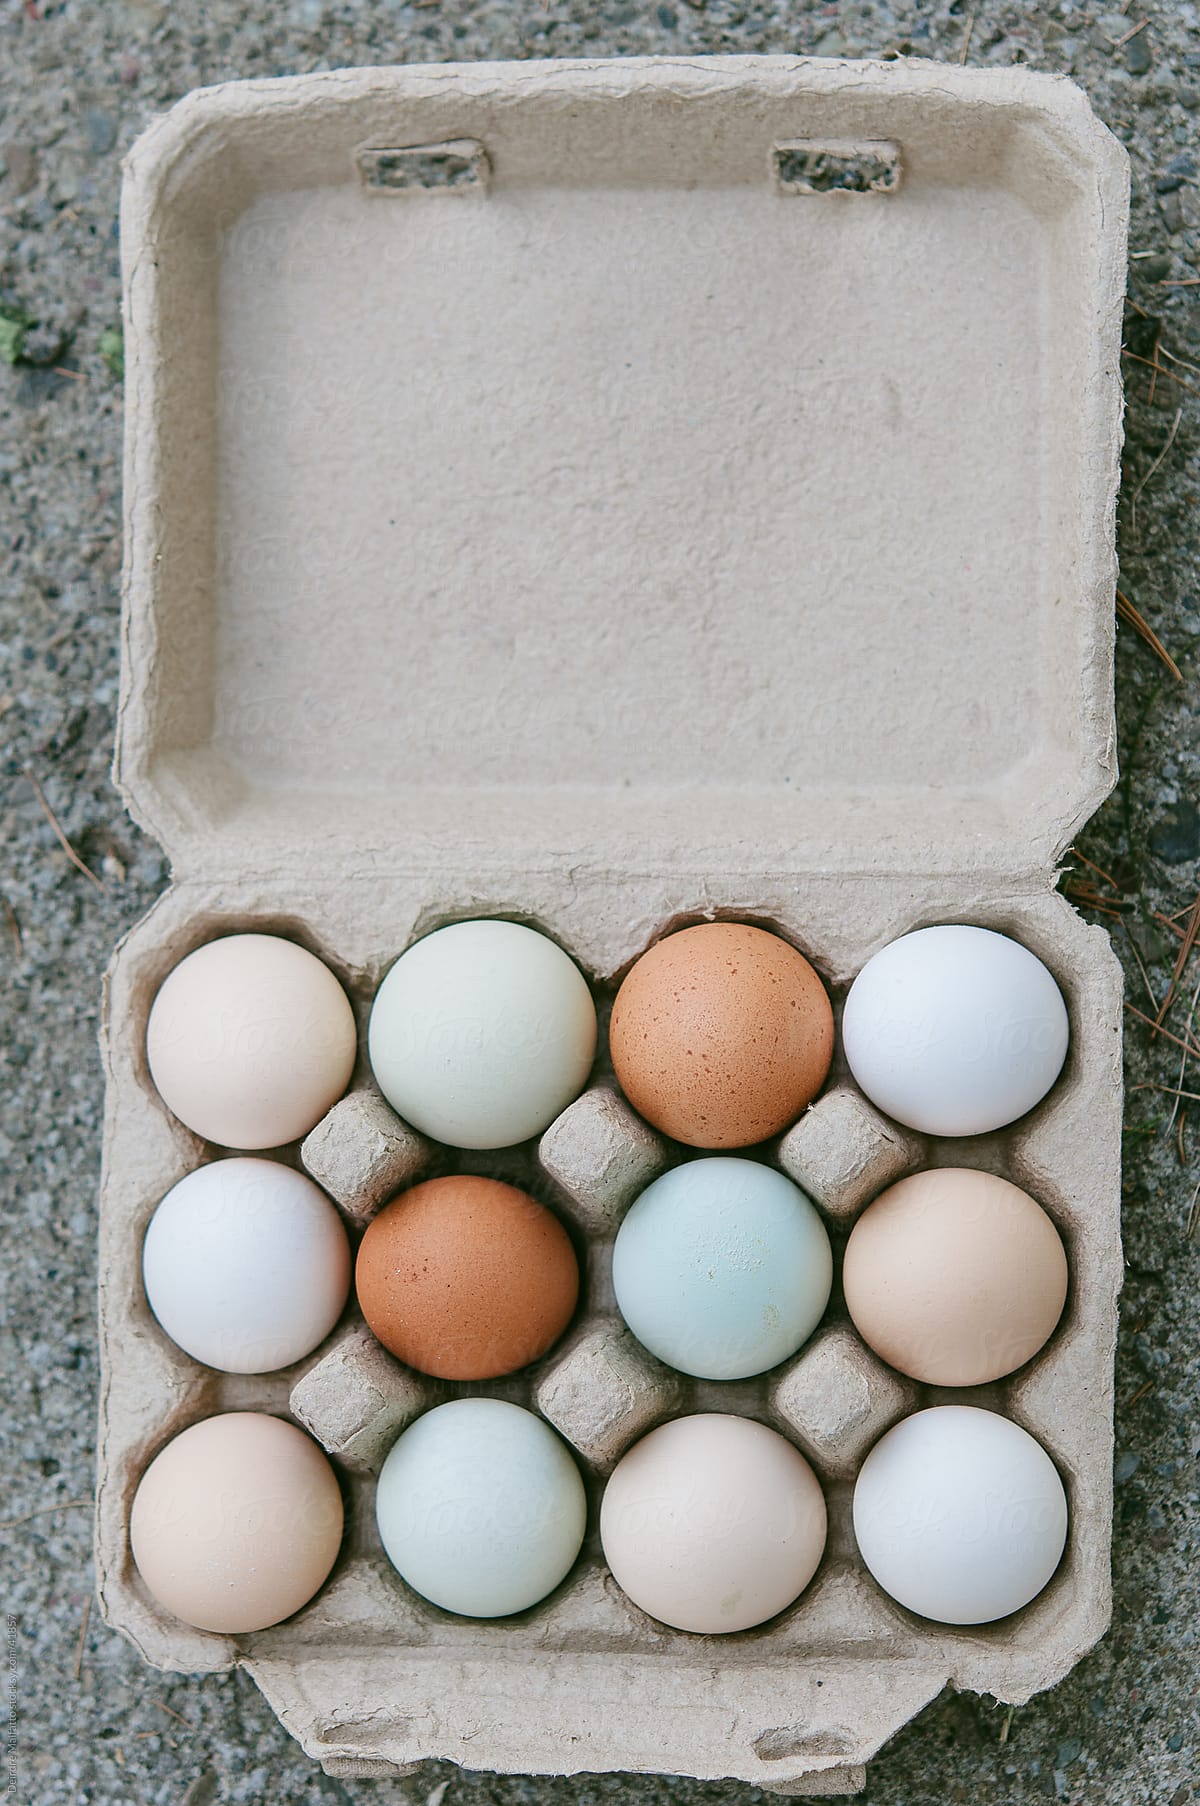 Carton of local organic colorful eggs